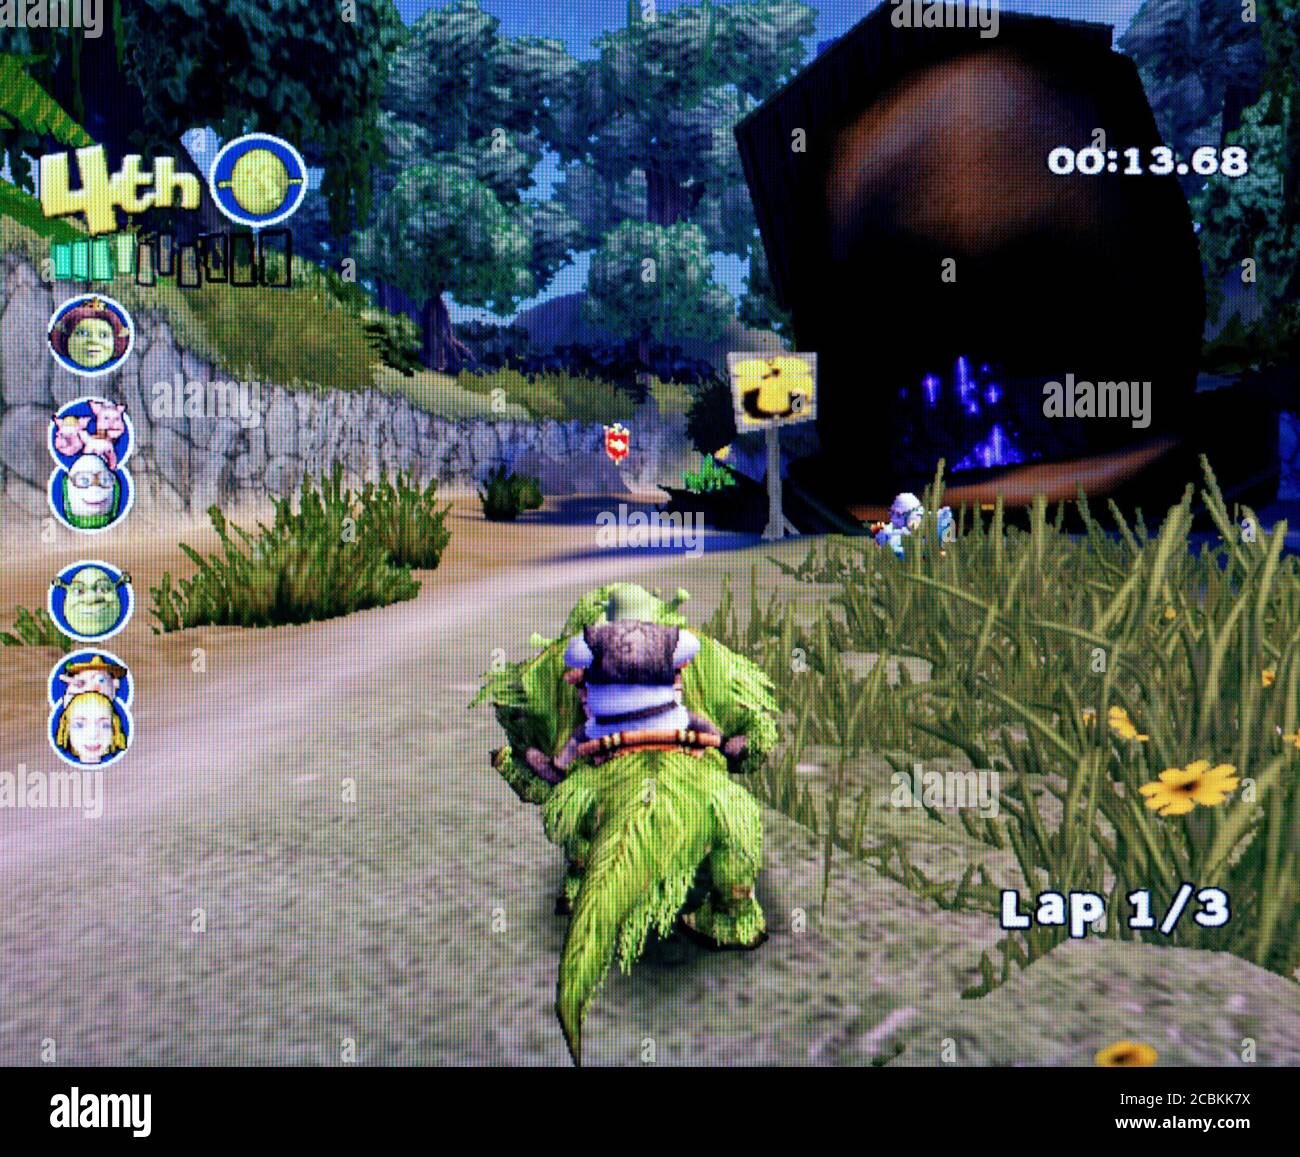 Shrek Smash n' Crash Racing - Nintendo Gamecube Videogame